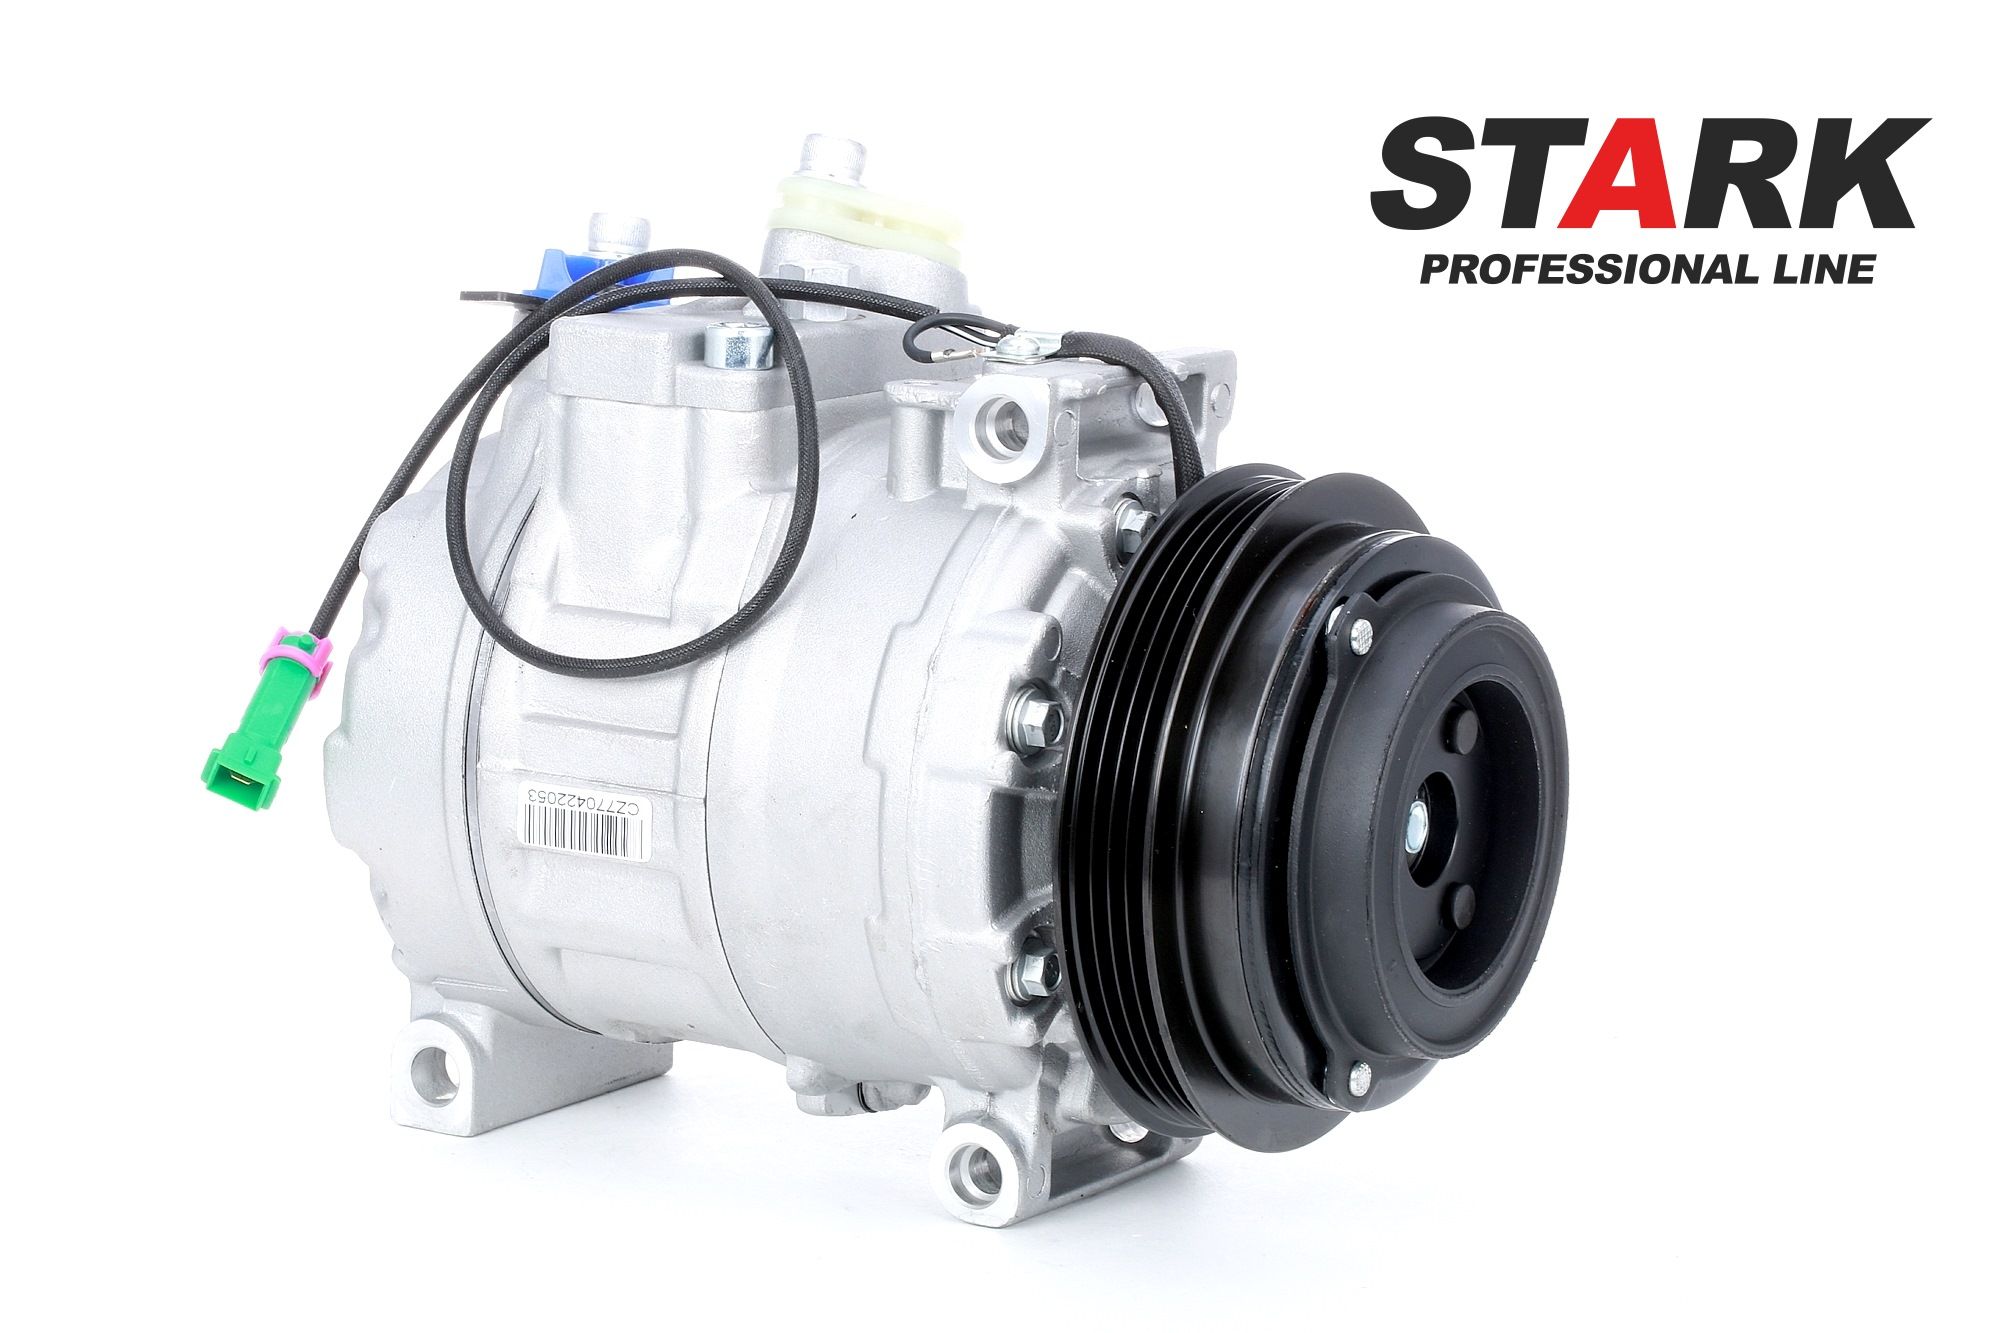 STARK SKKM-0340149 Air conditioning compressor 7SBU16C, PAG 46, R 134a, with PAG compressor oil